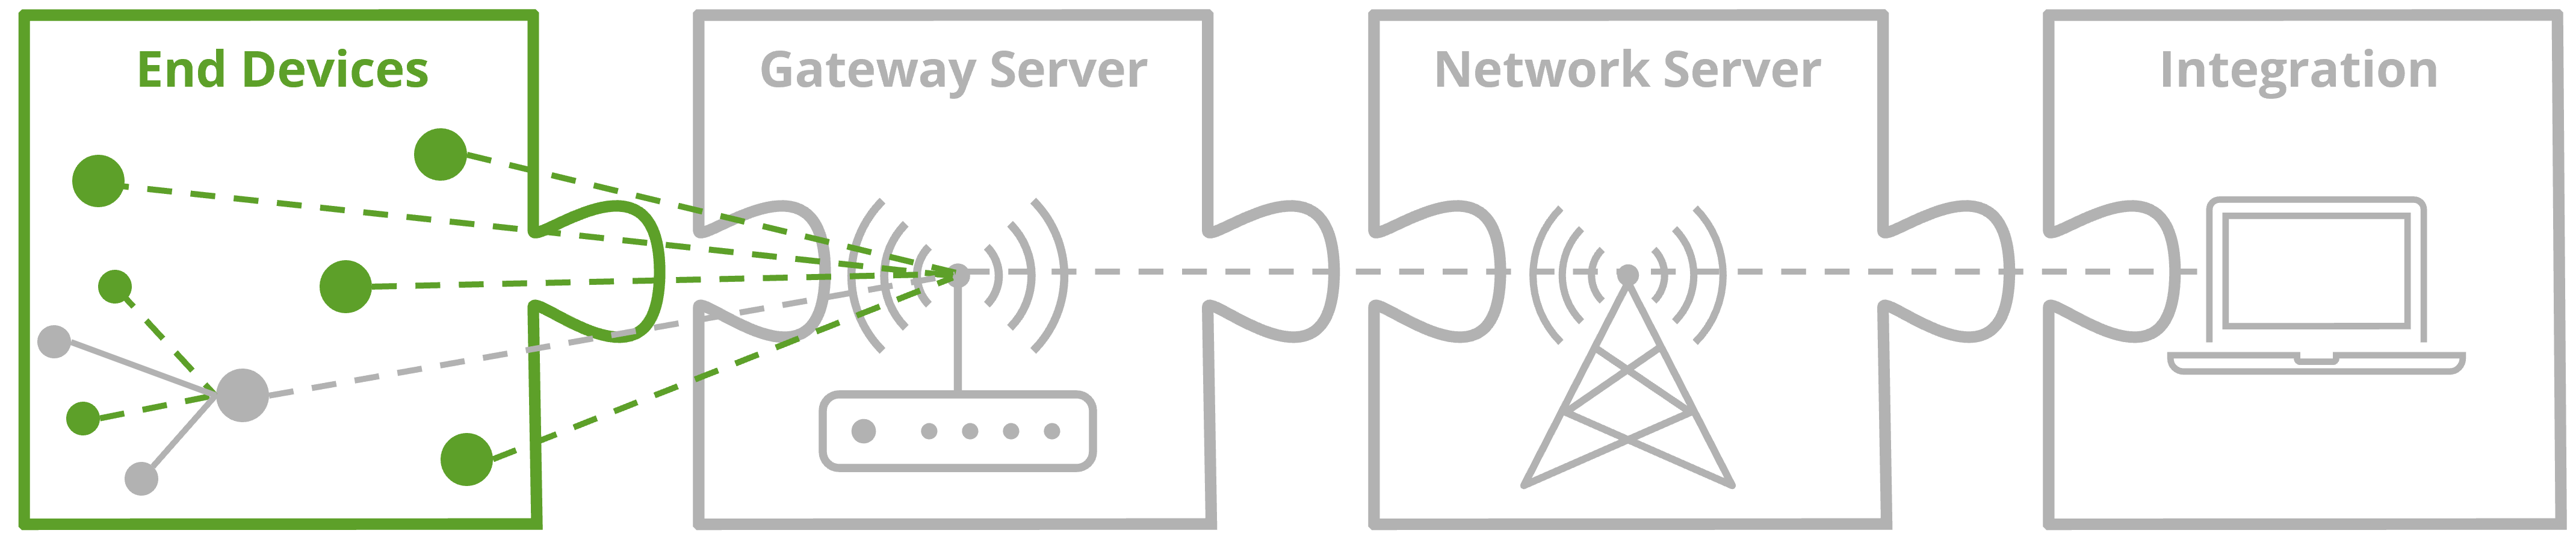 Portfolio Network